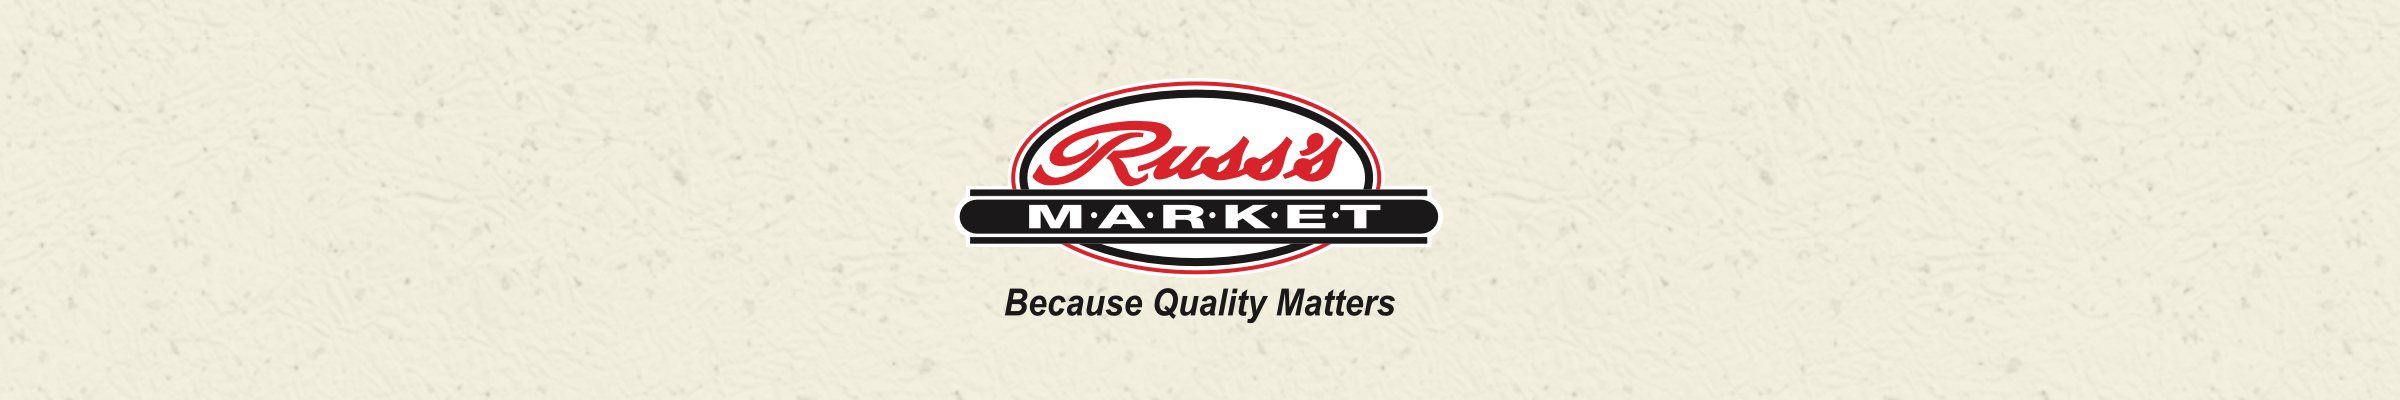 Russ's Market - Waverly